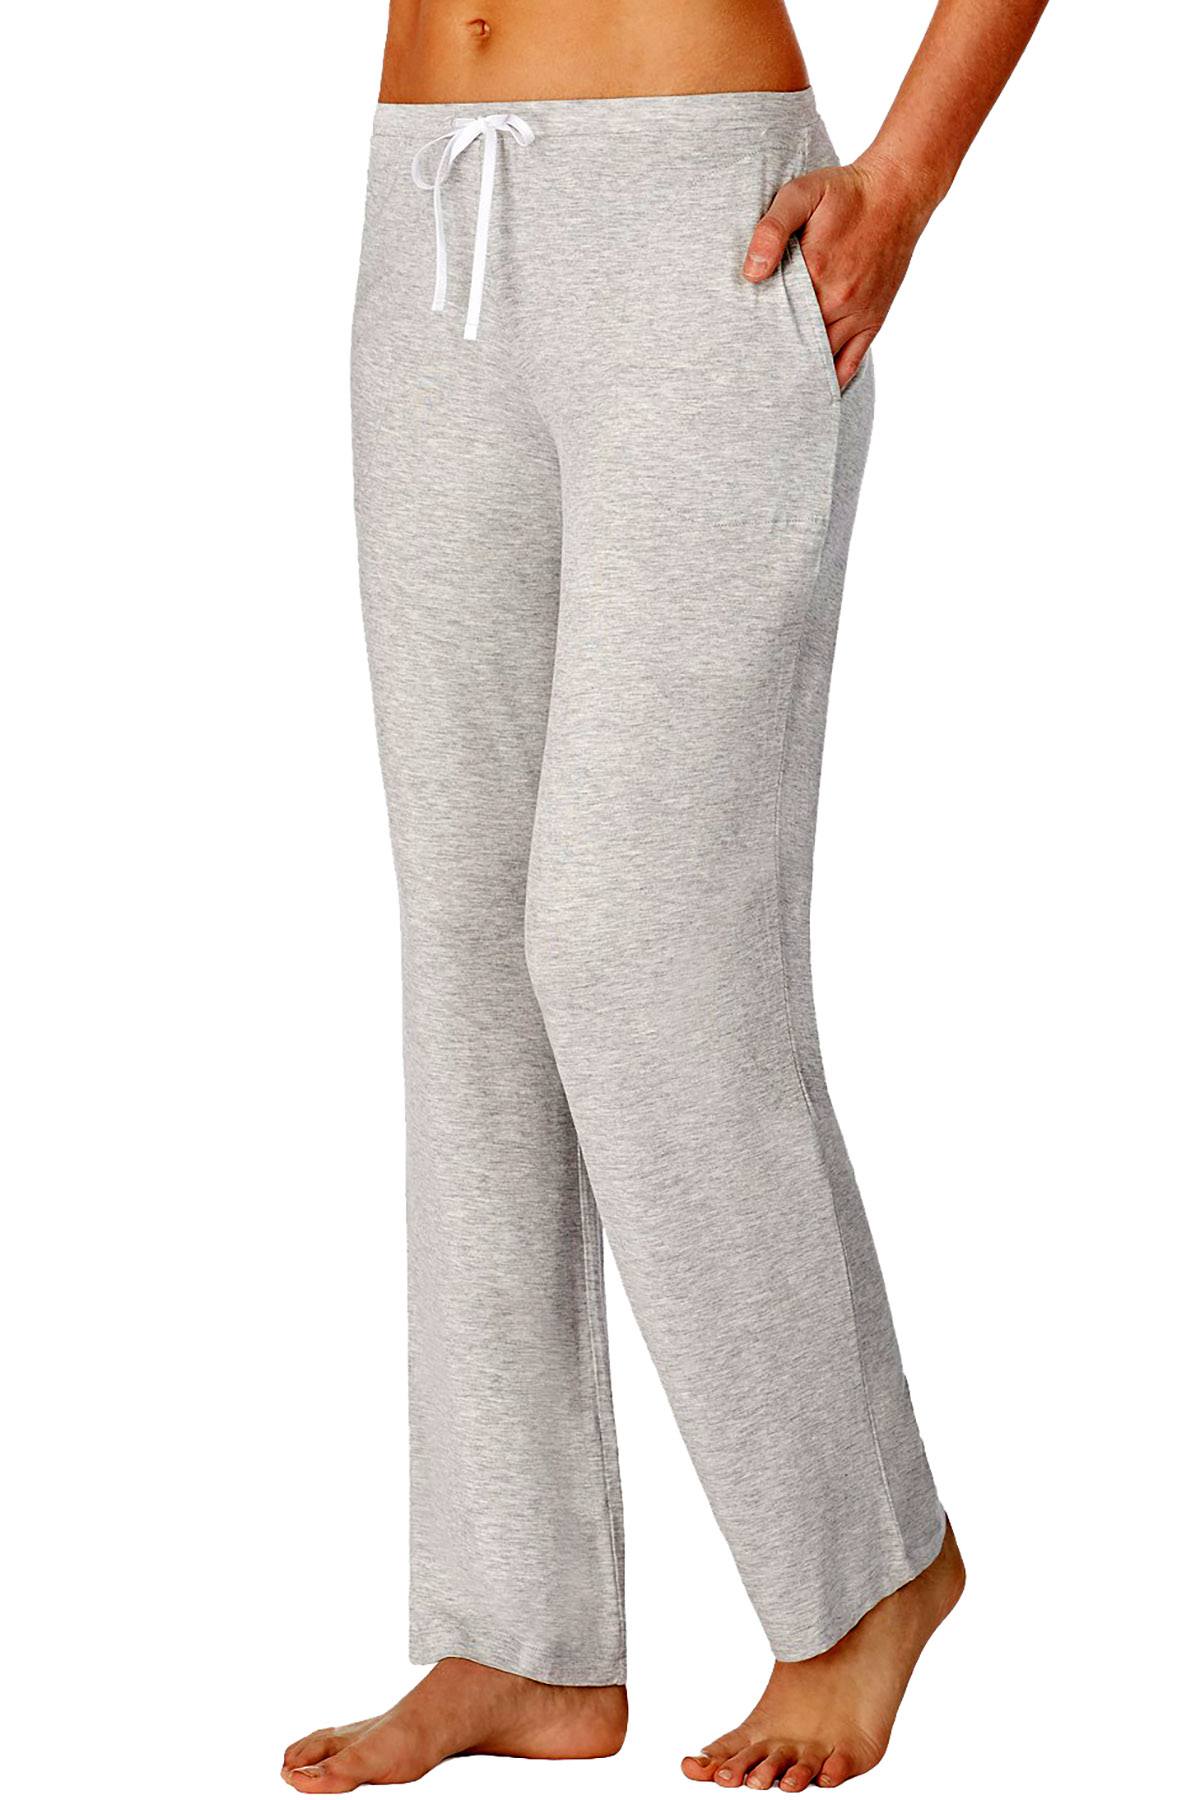 DKNY Light Grey Knit Pajama Pant